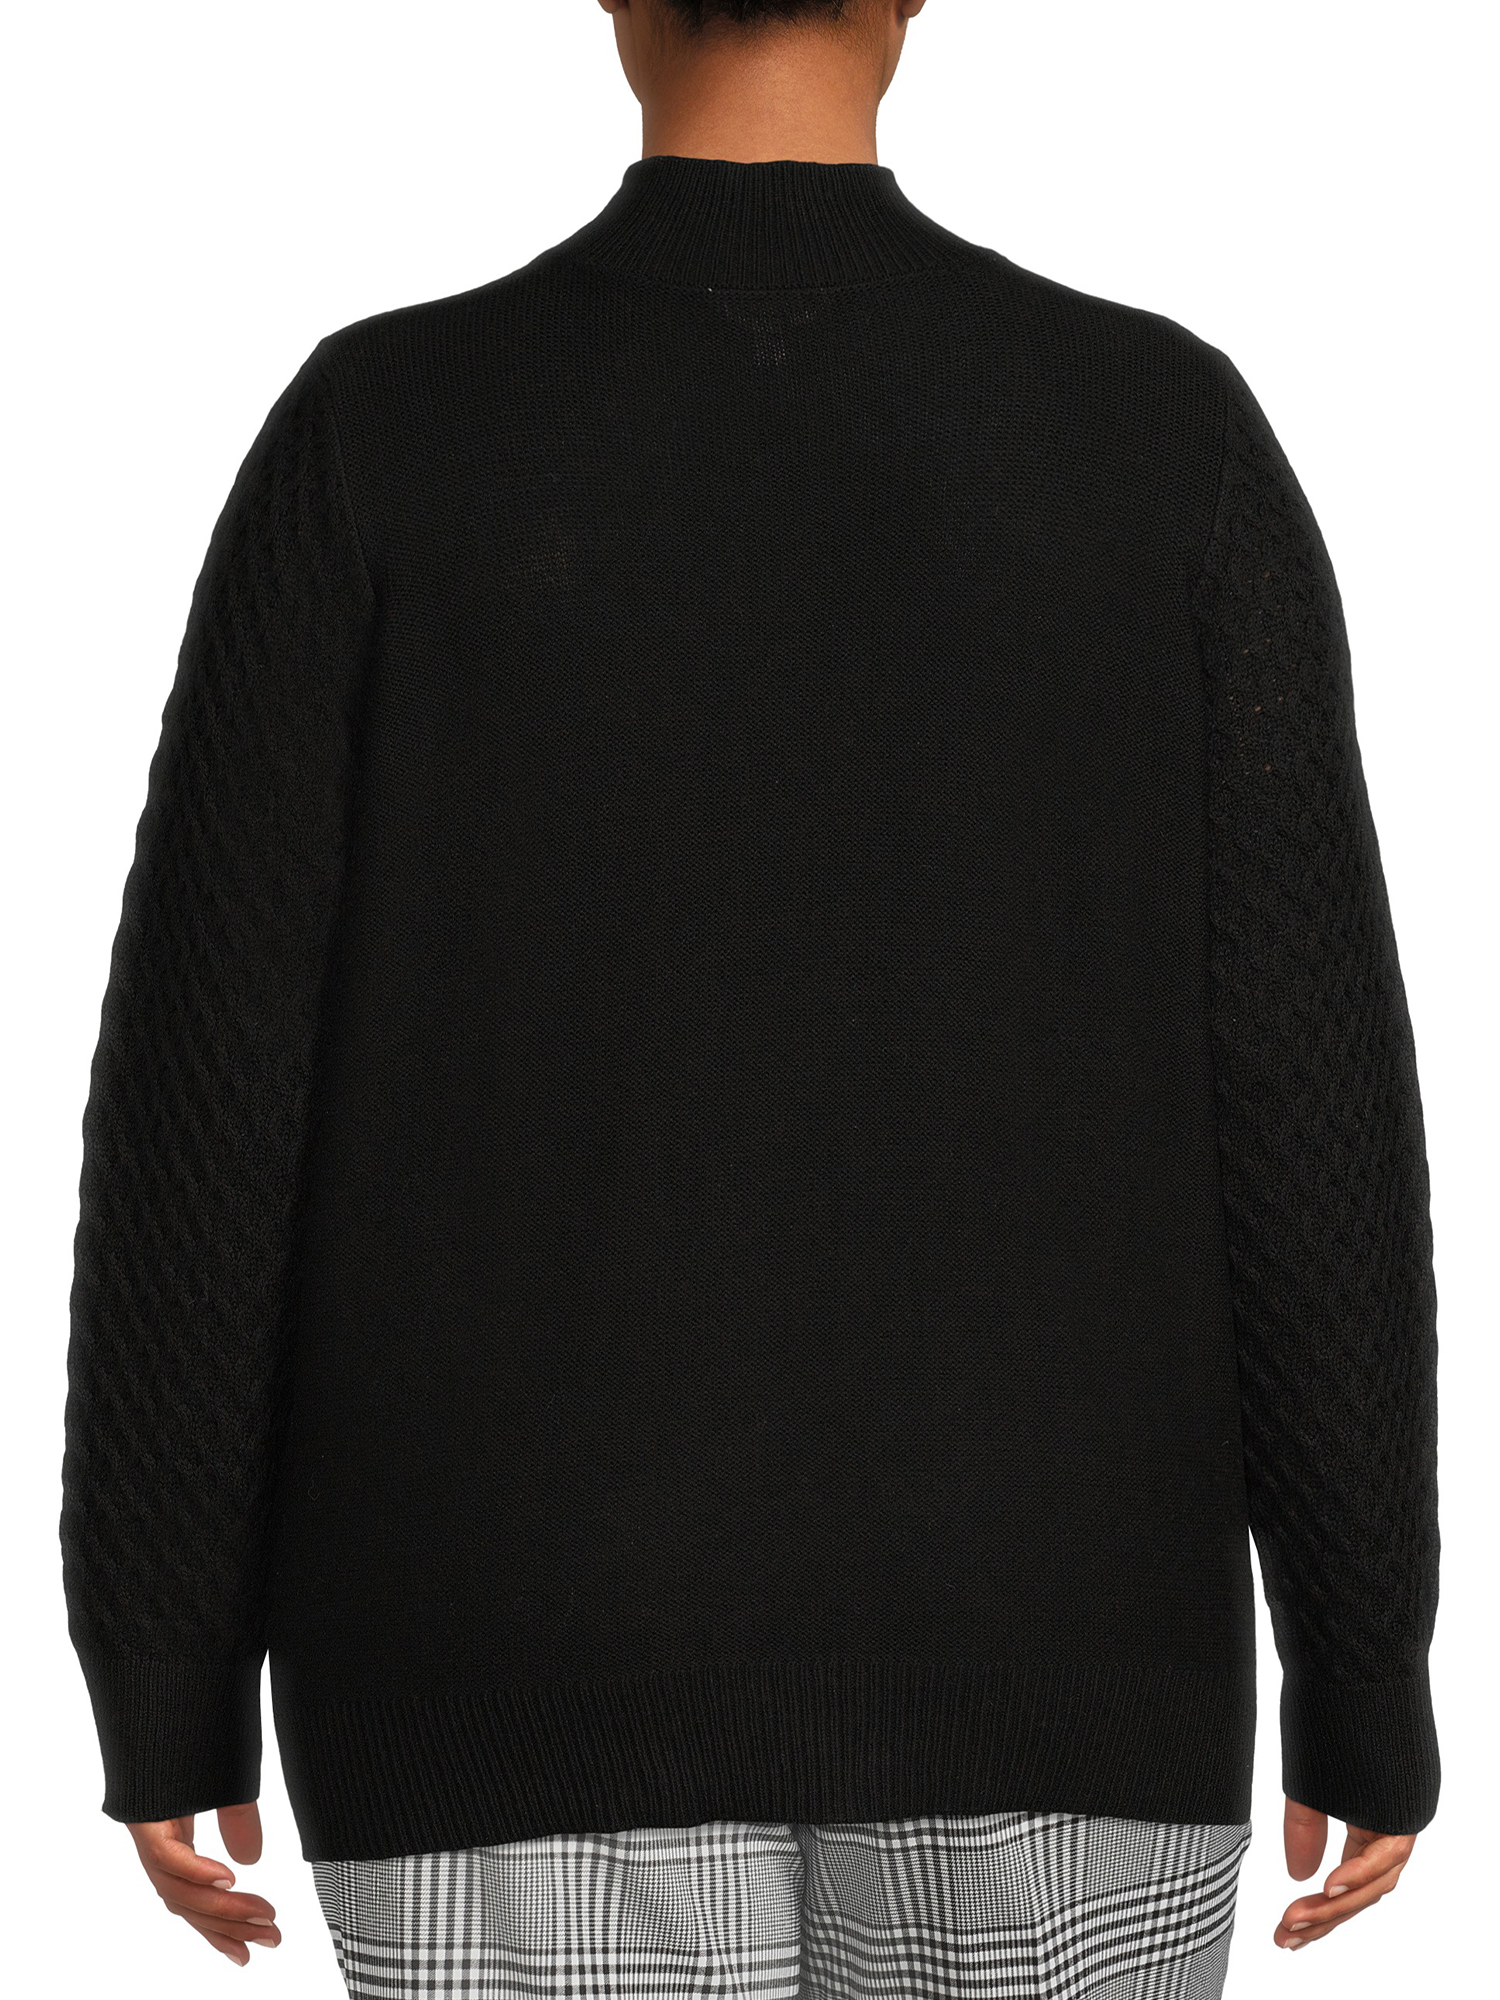 Terra & Sky Women's Cutout Pullover Sweater - image 3 of 5